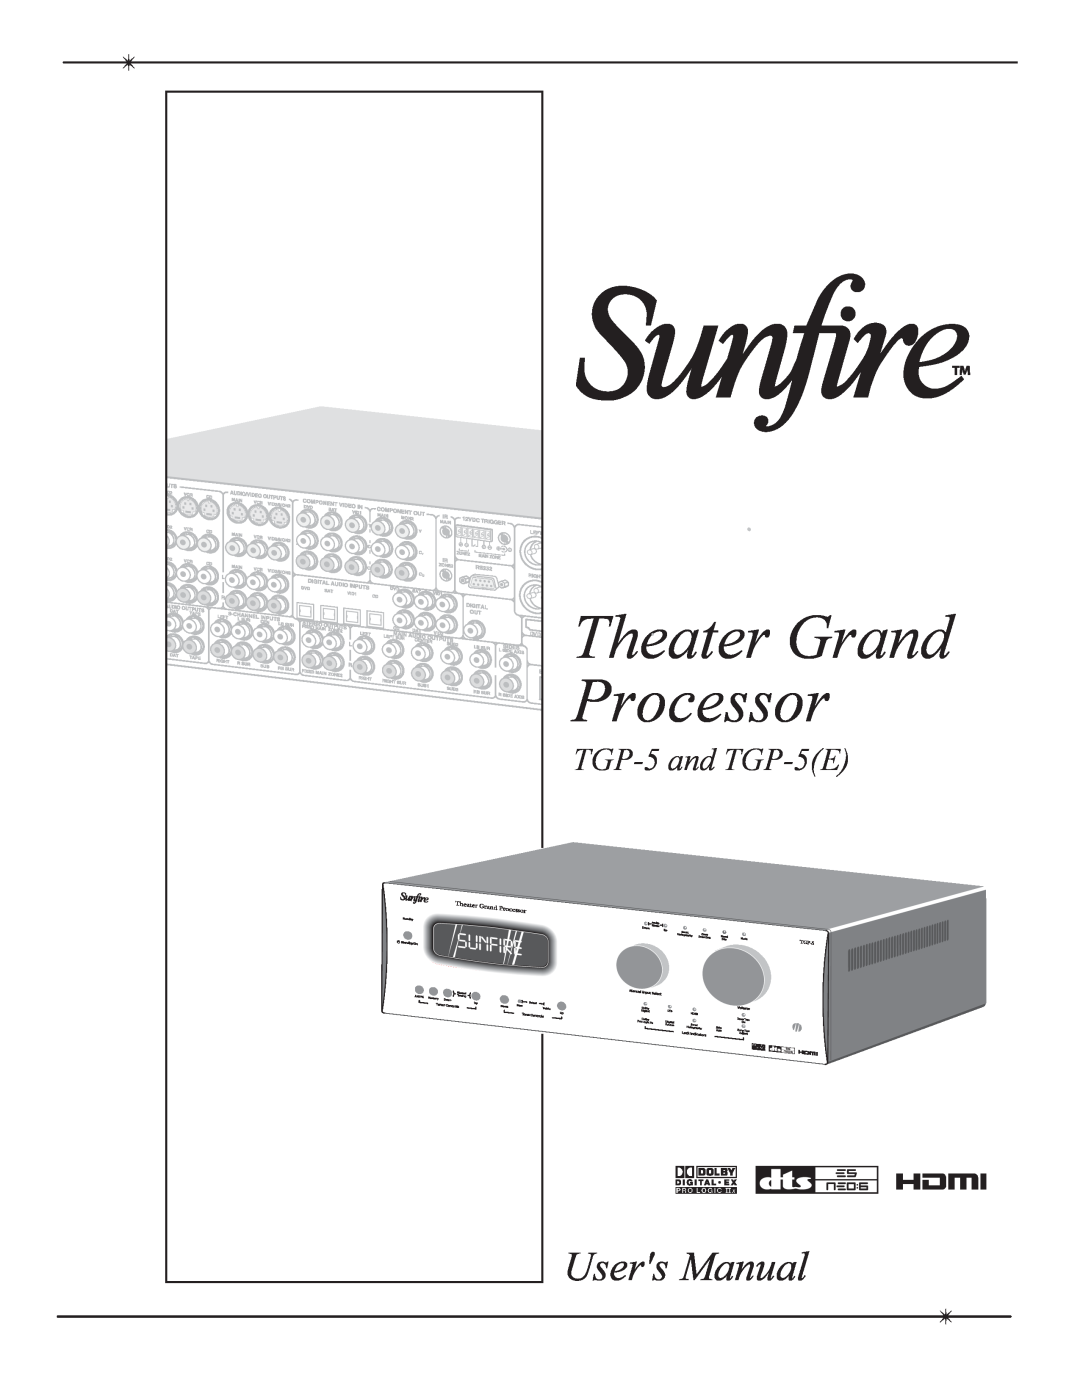 Sunfire TGP-5(E) manual Theater Grand Processor, TGP-5and TGP-5E 